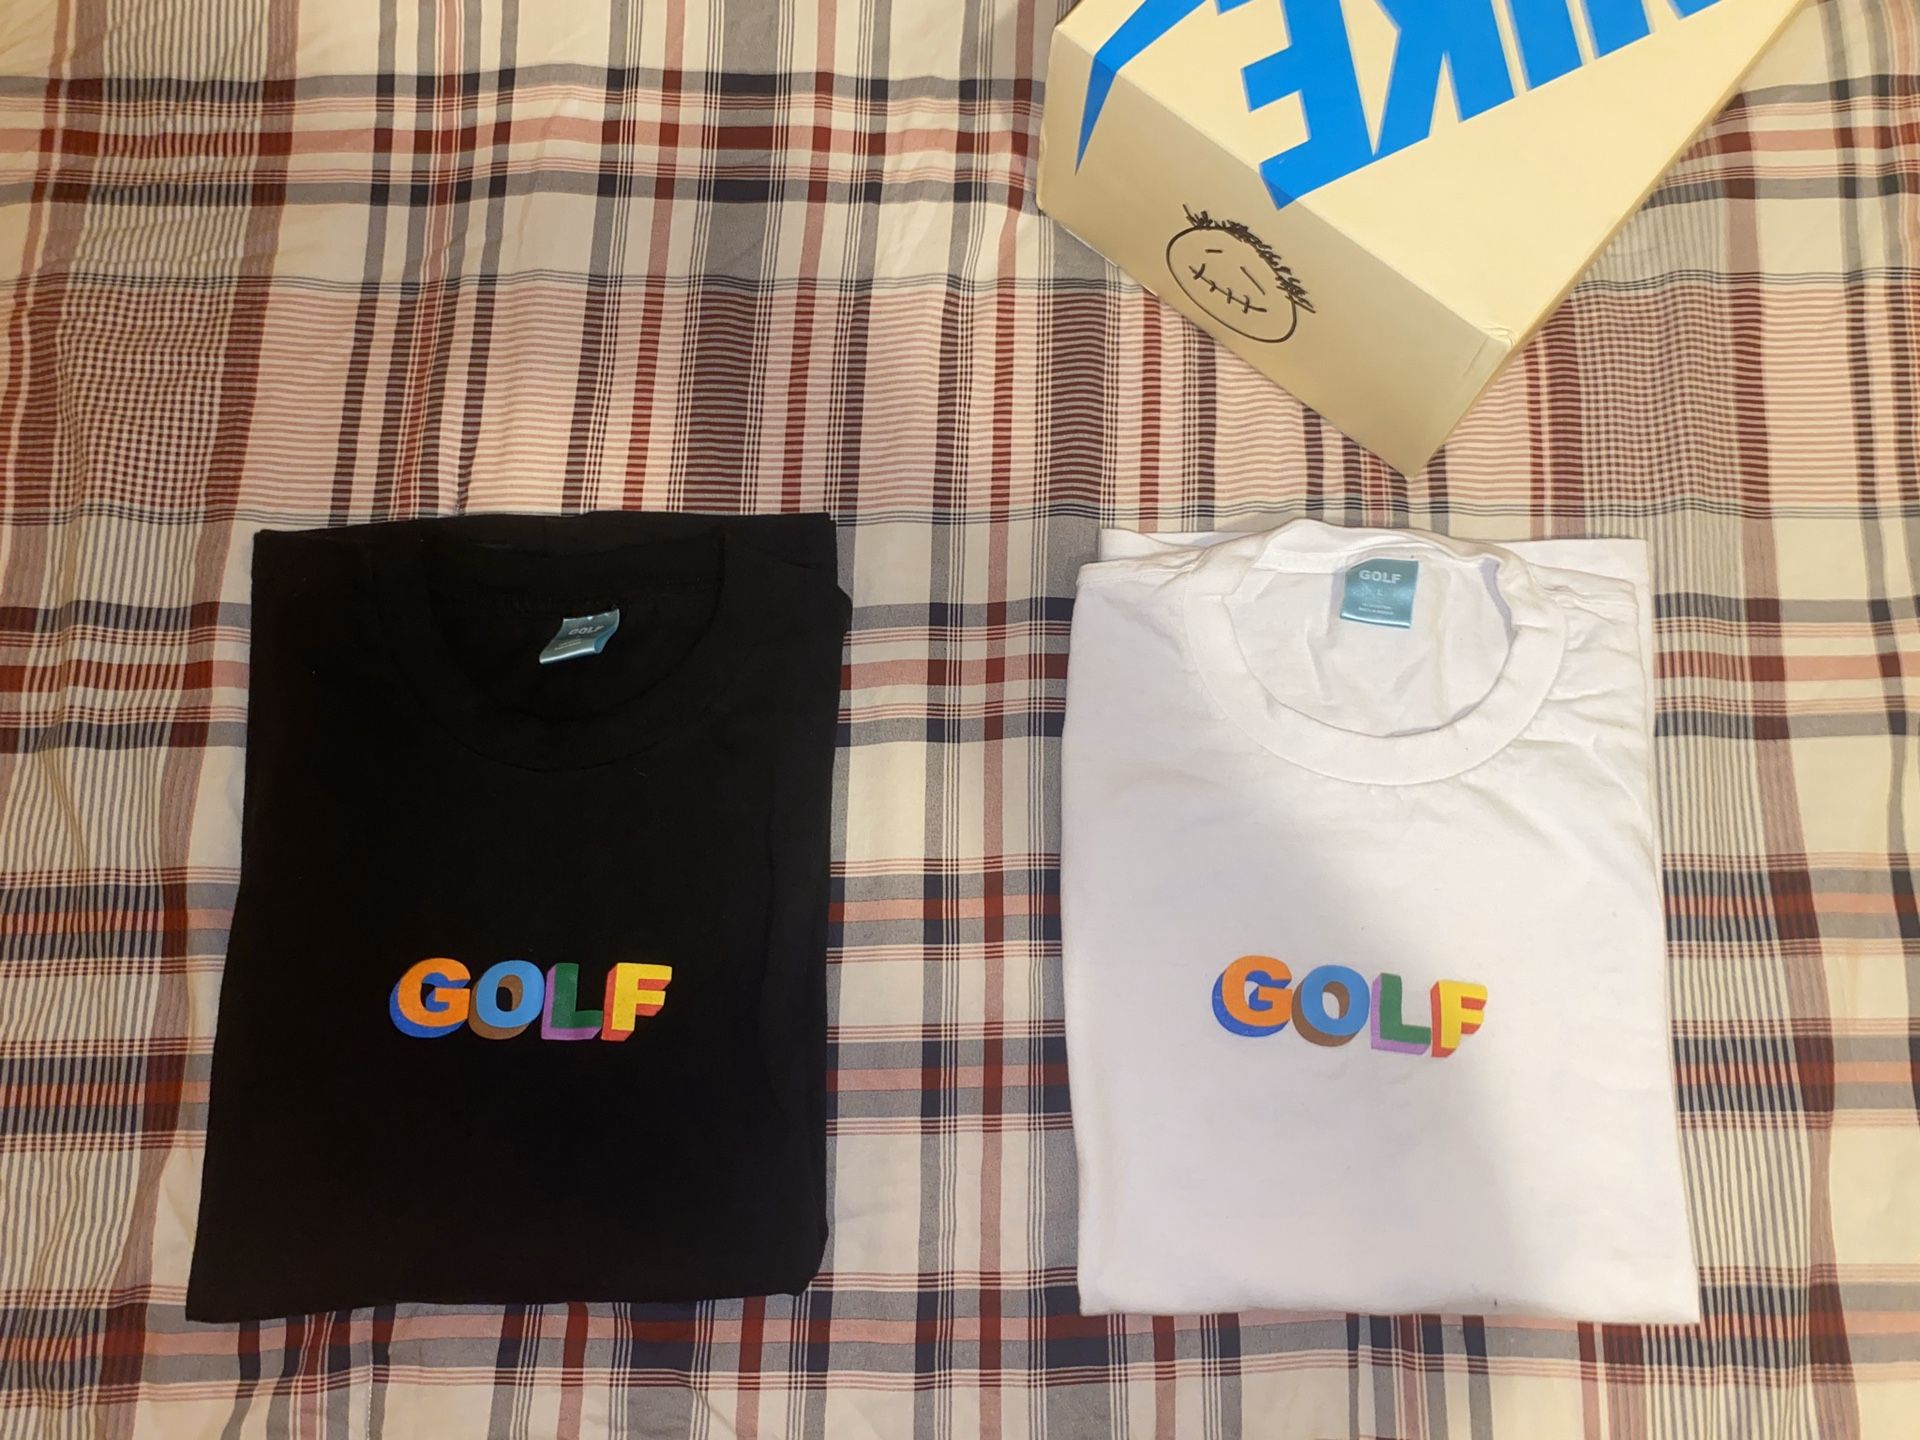 Golfwang shirts